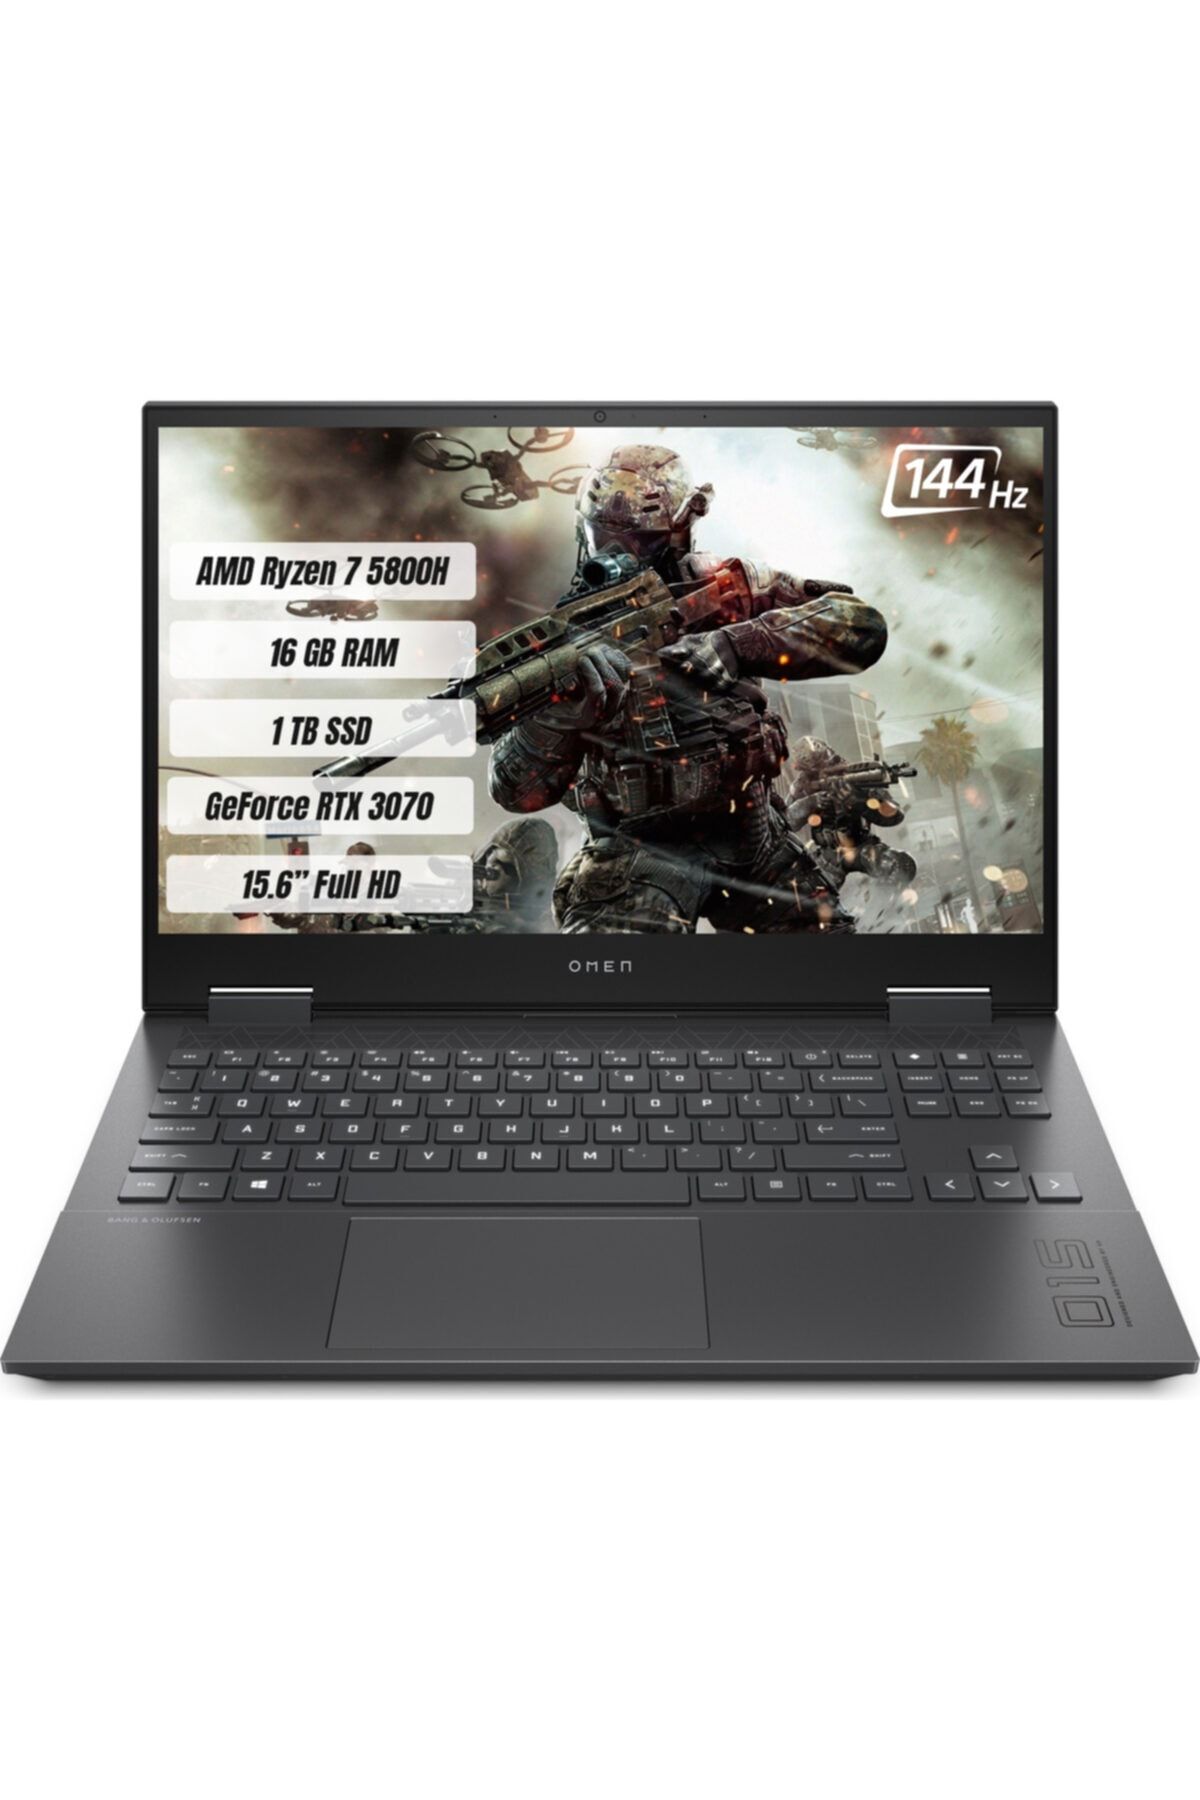 HP Omen Laptop 15-en1011nt Amd Ryzen 7 5800h 16gb 1tb Ssd Rtx 3070 144 Hz Freedos 15,6" Fhd 434m3ea